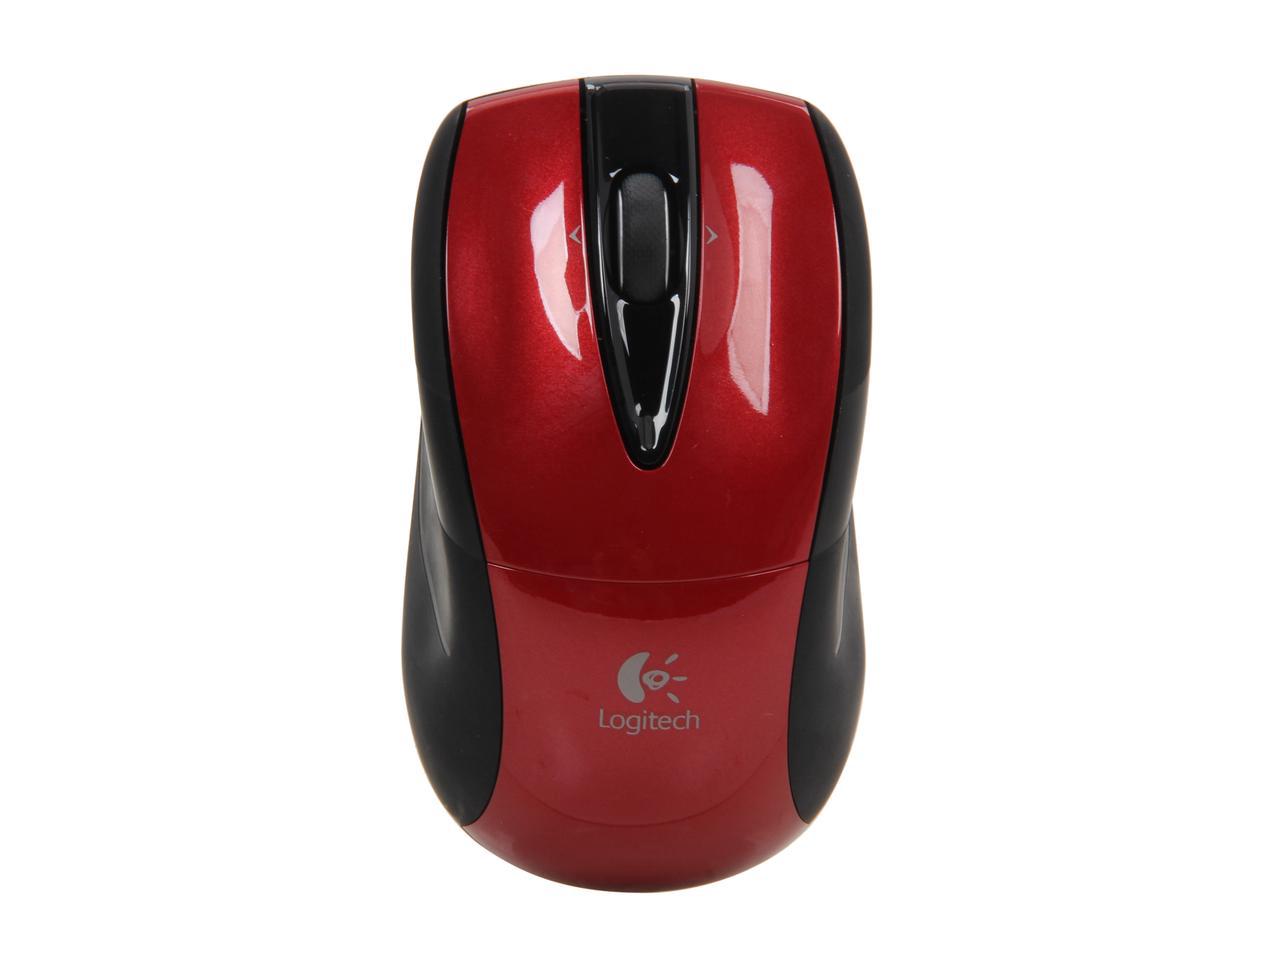 Logitech Wireless Mouse M525 - Red / Black | Tech Co. Ltd